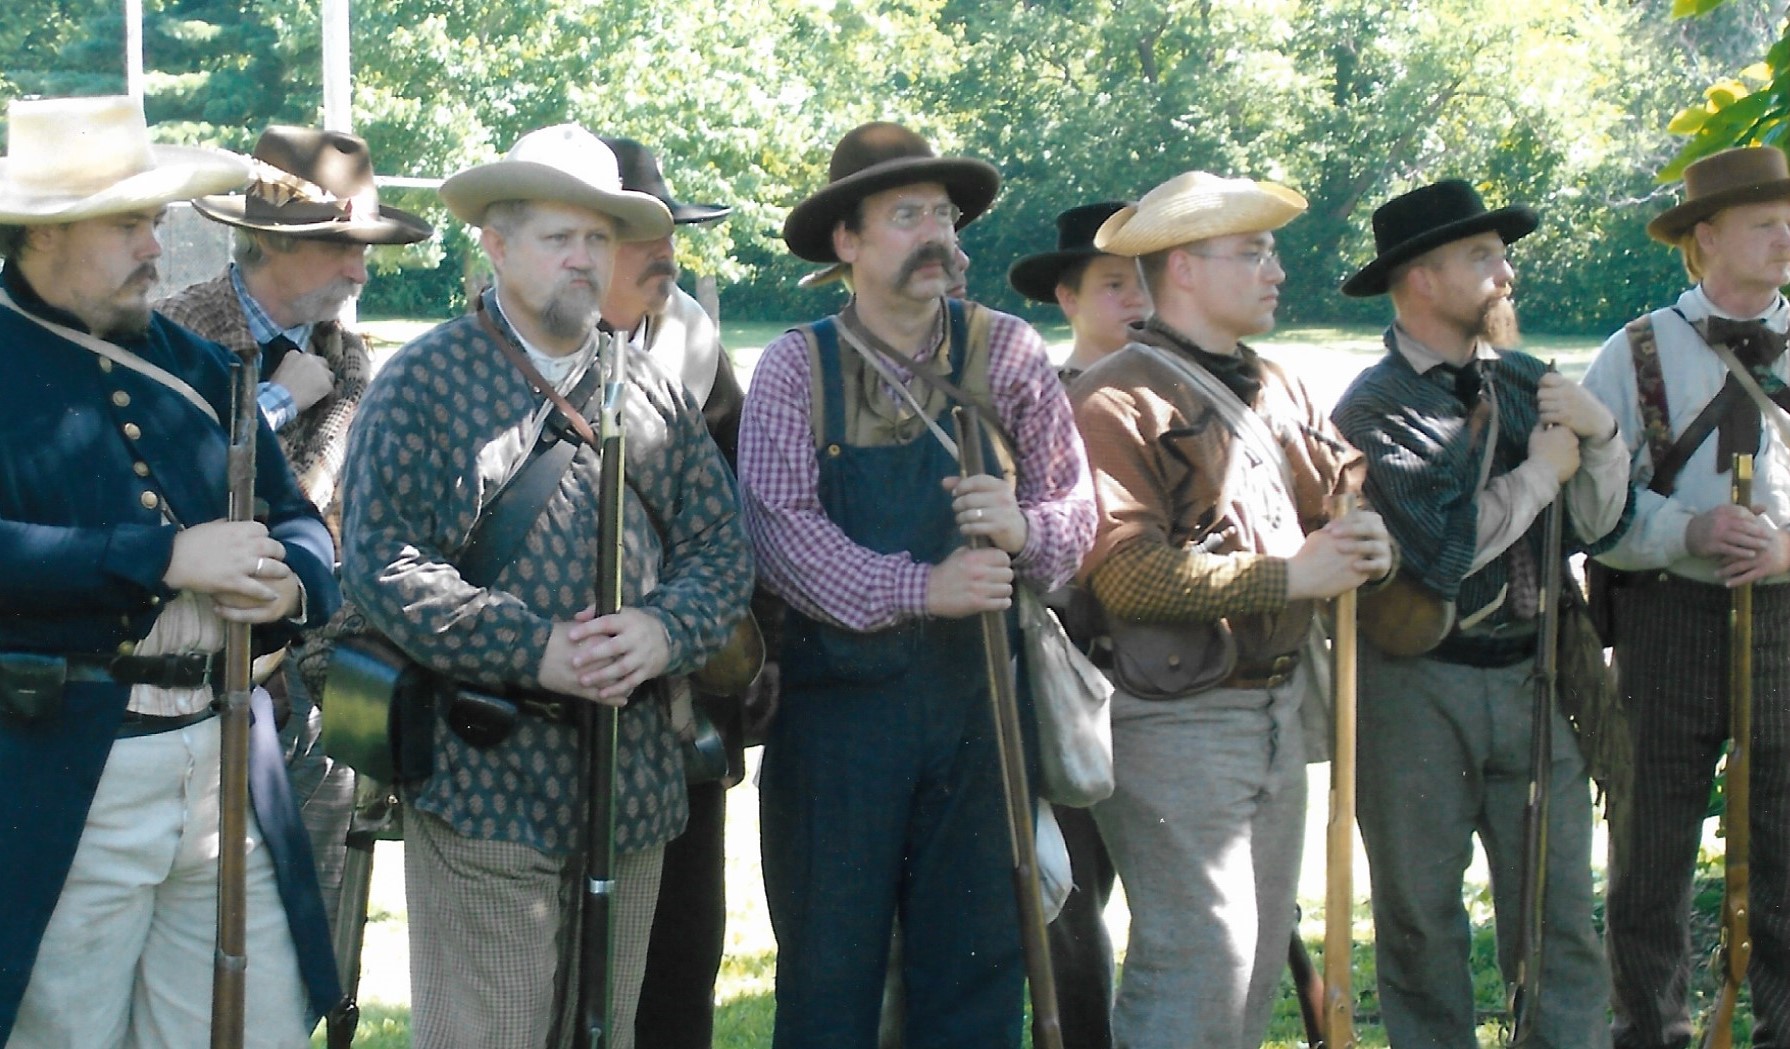 men dressed in civil war attire